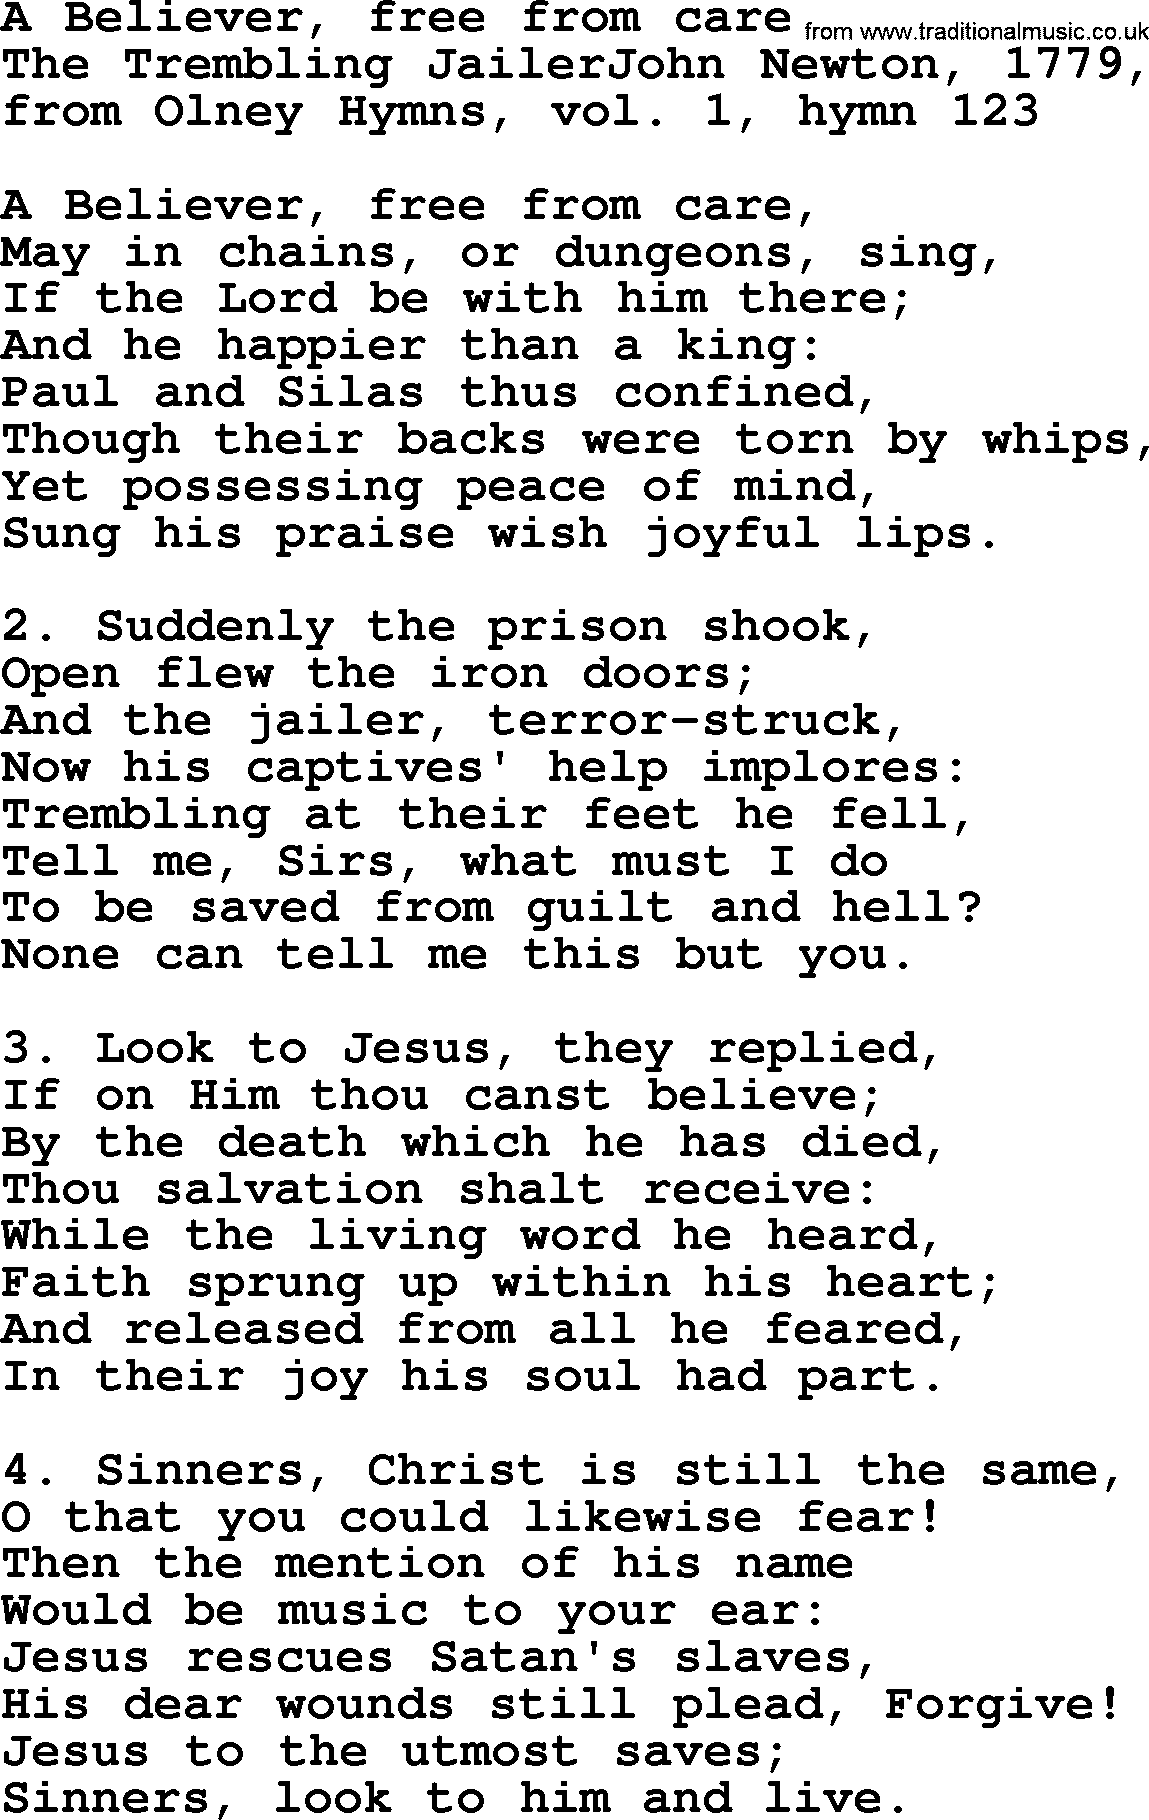 John Newton hymn: A Believer, Free From Care, lyrics